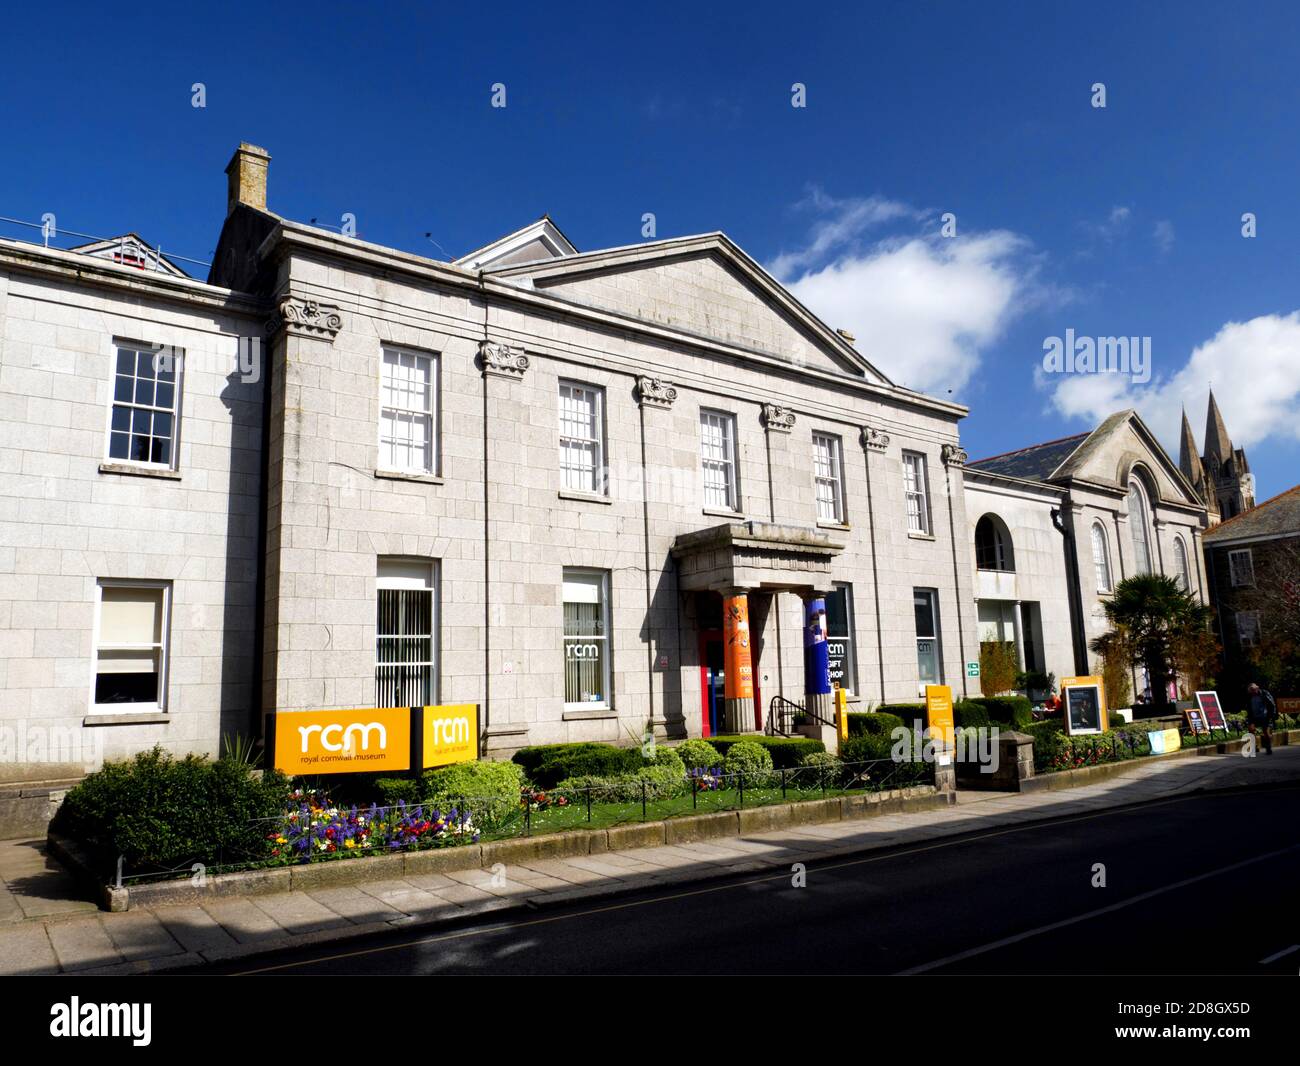 Royal Cornwall Museum, River Street, Truro, Cornwall. Stock Photo